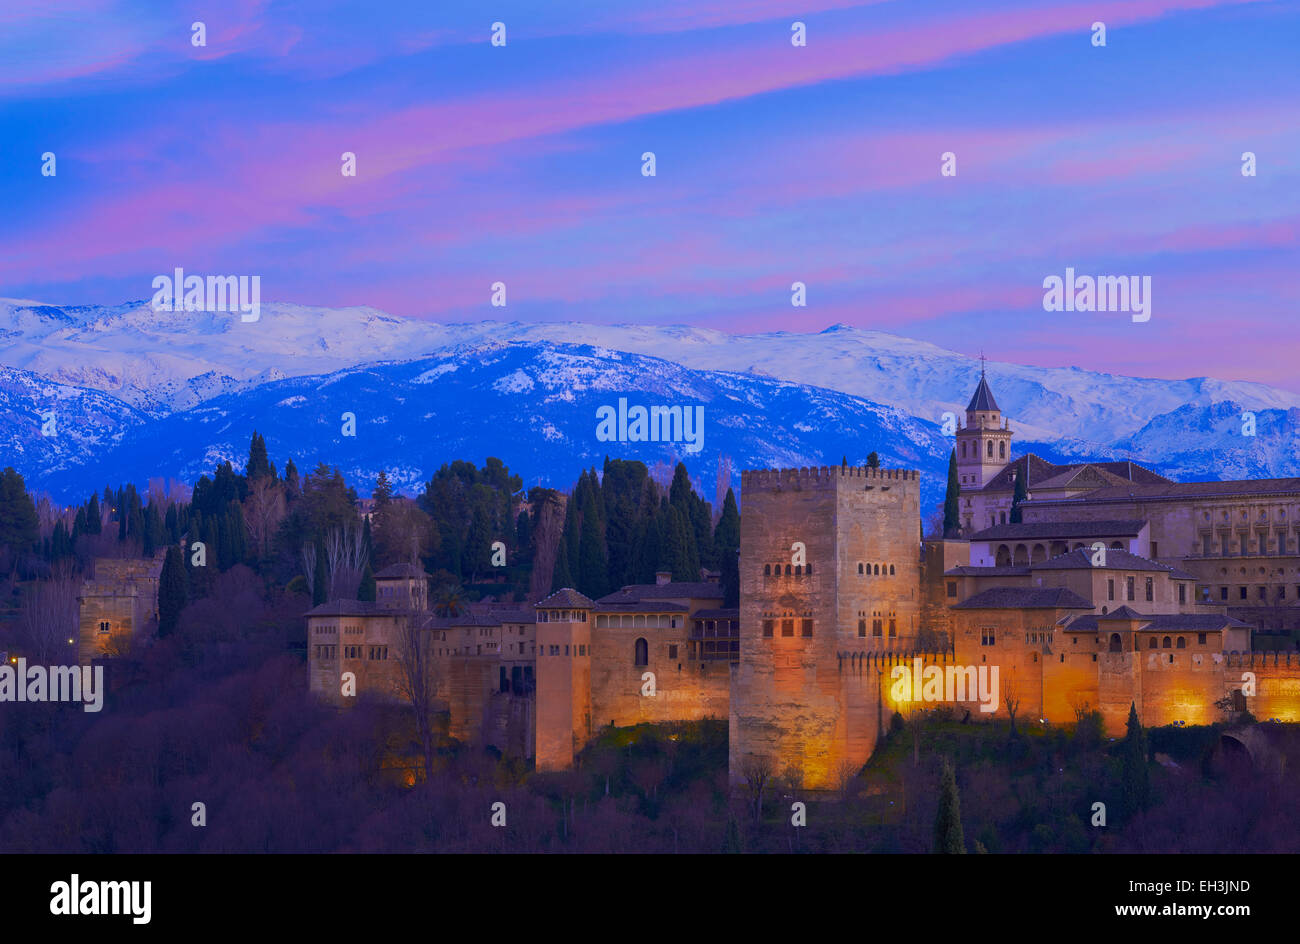 Alhambra, UNESCO World Heritage Site, at dusk, Sierra Nevada, Granada, Andalusia, Spain Stock Photo